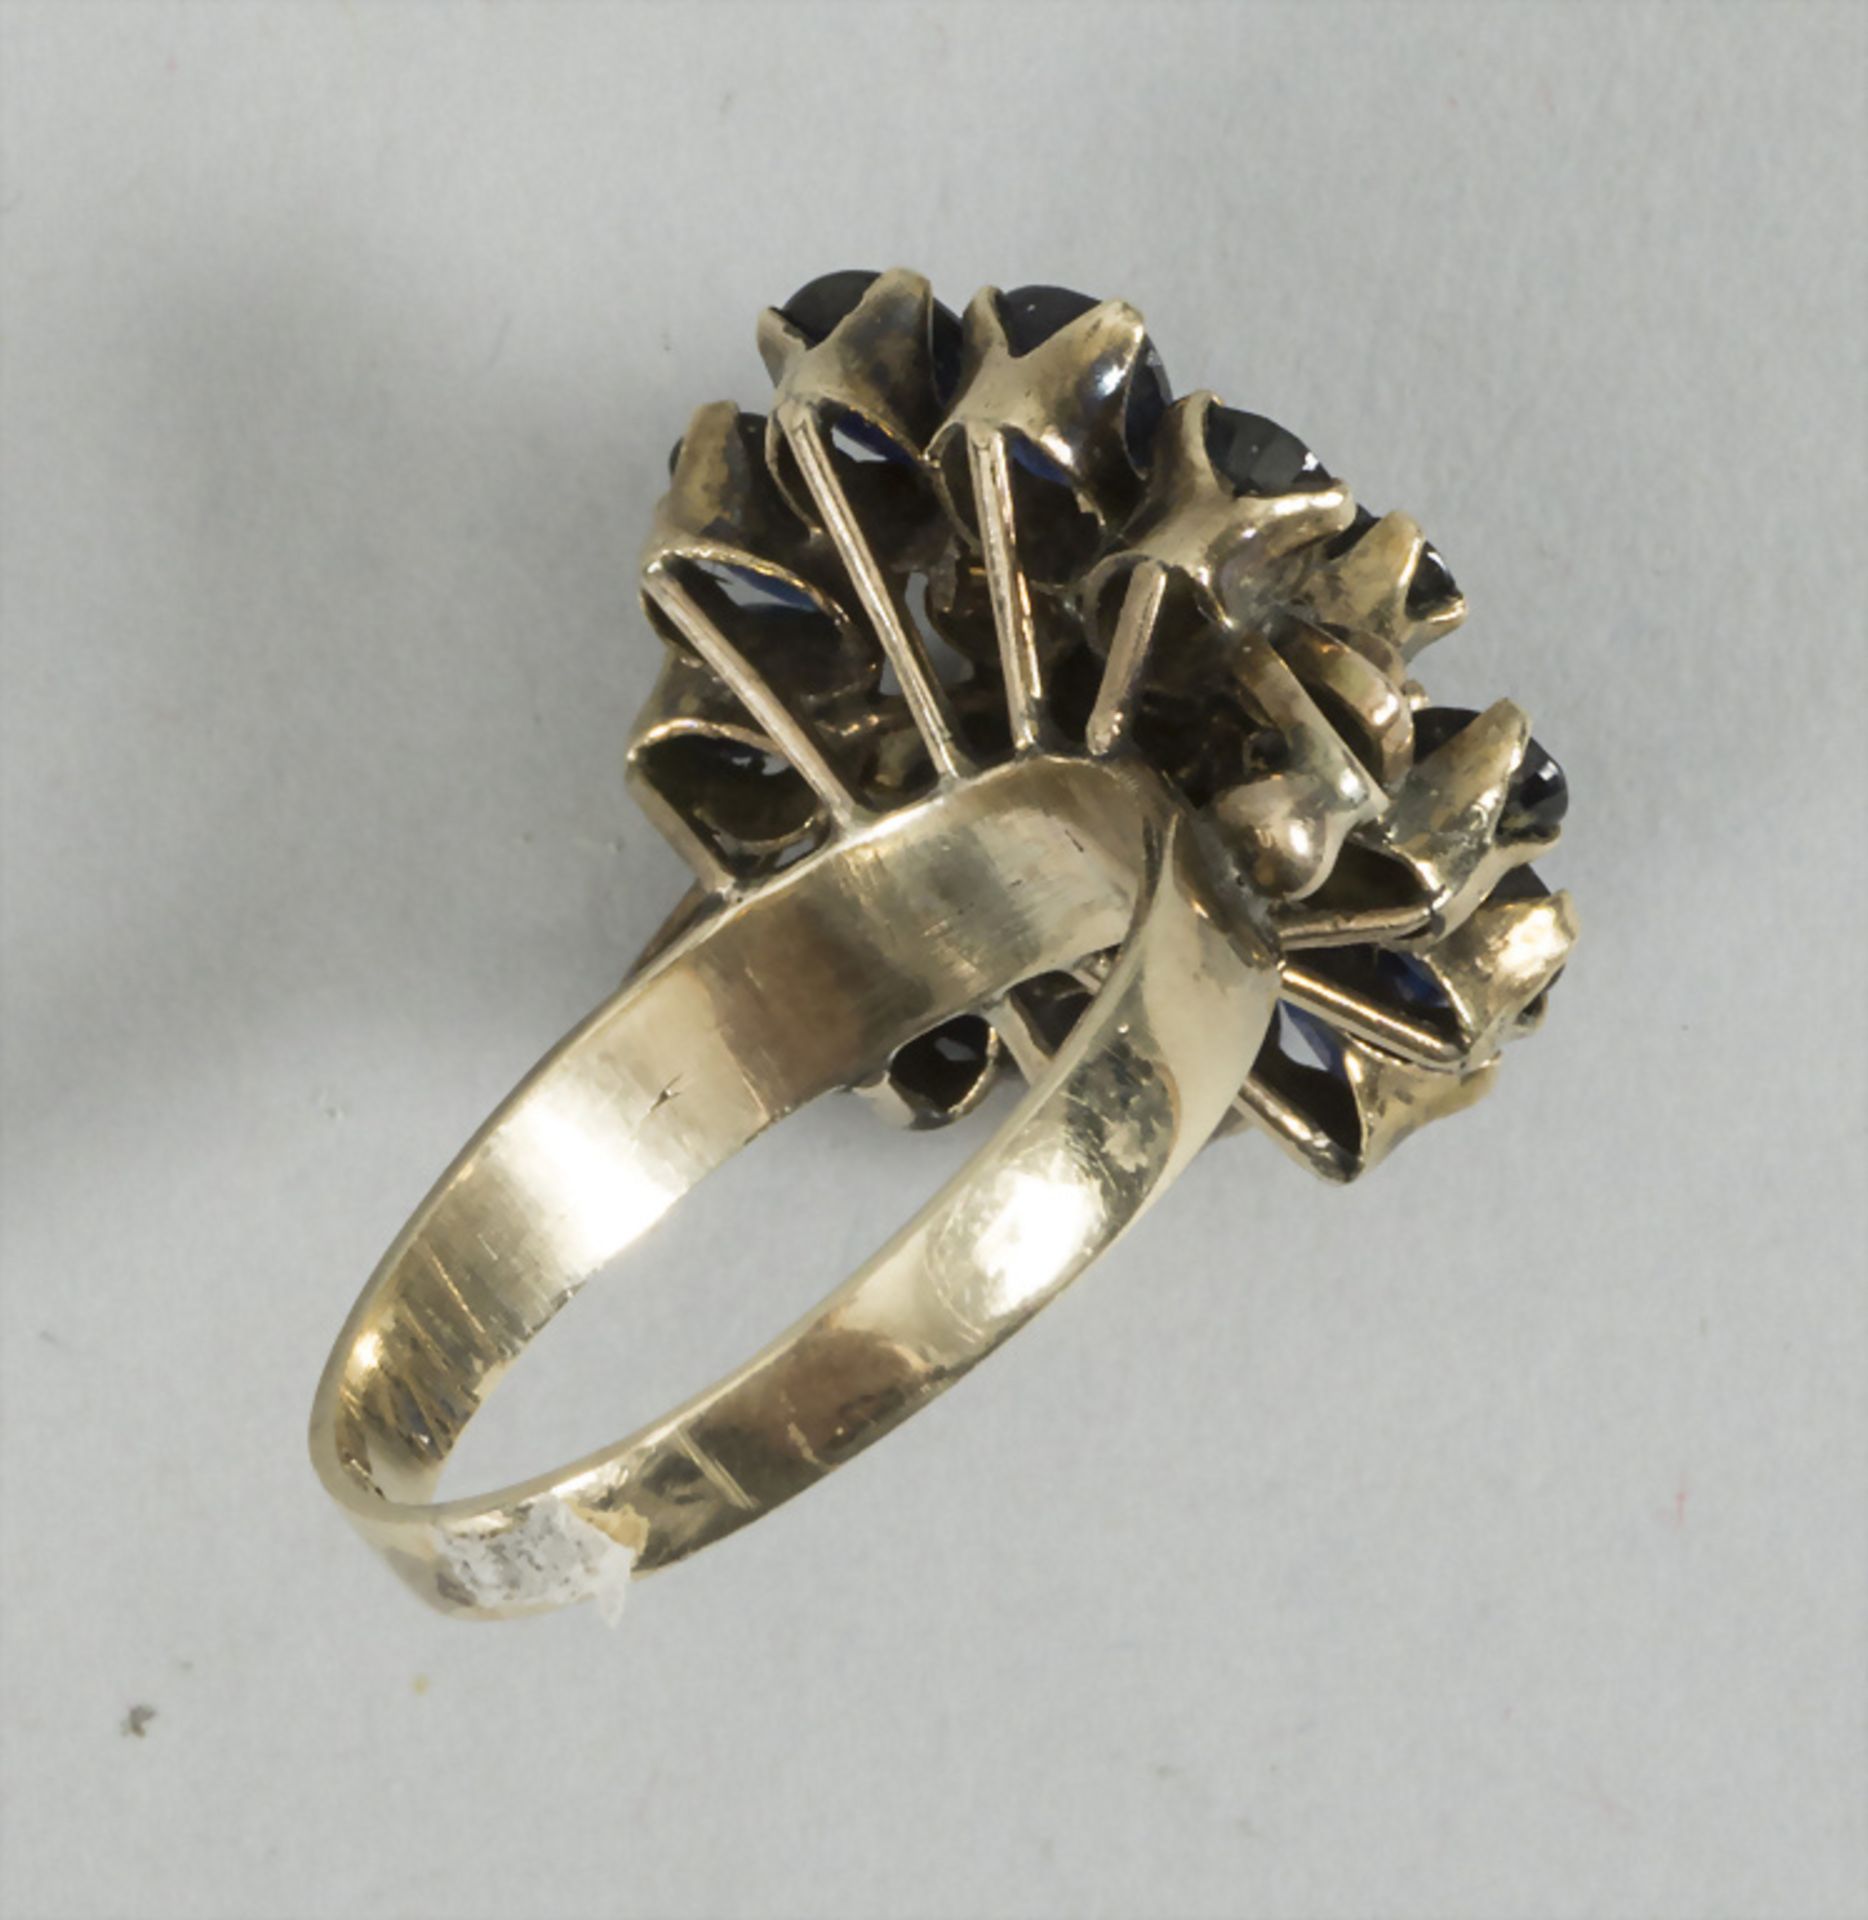 Damenring / A ladies ring in 18k gold - Image 3 of 4